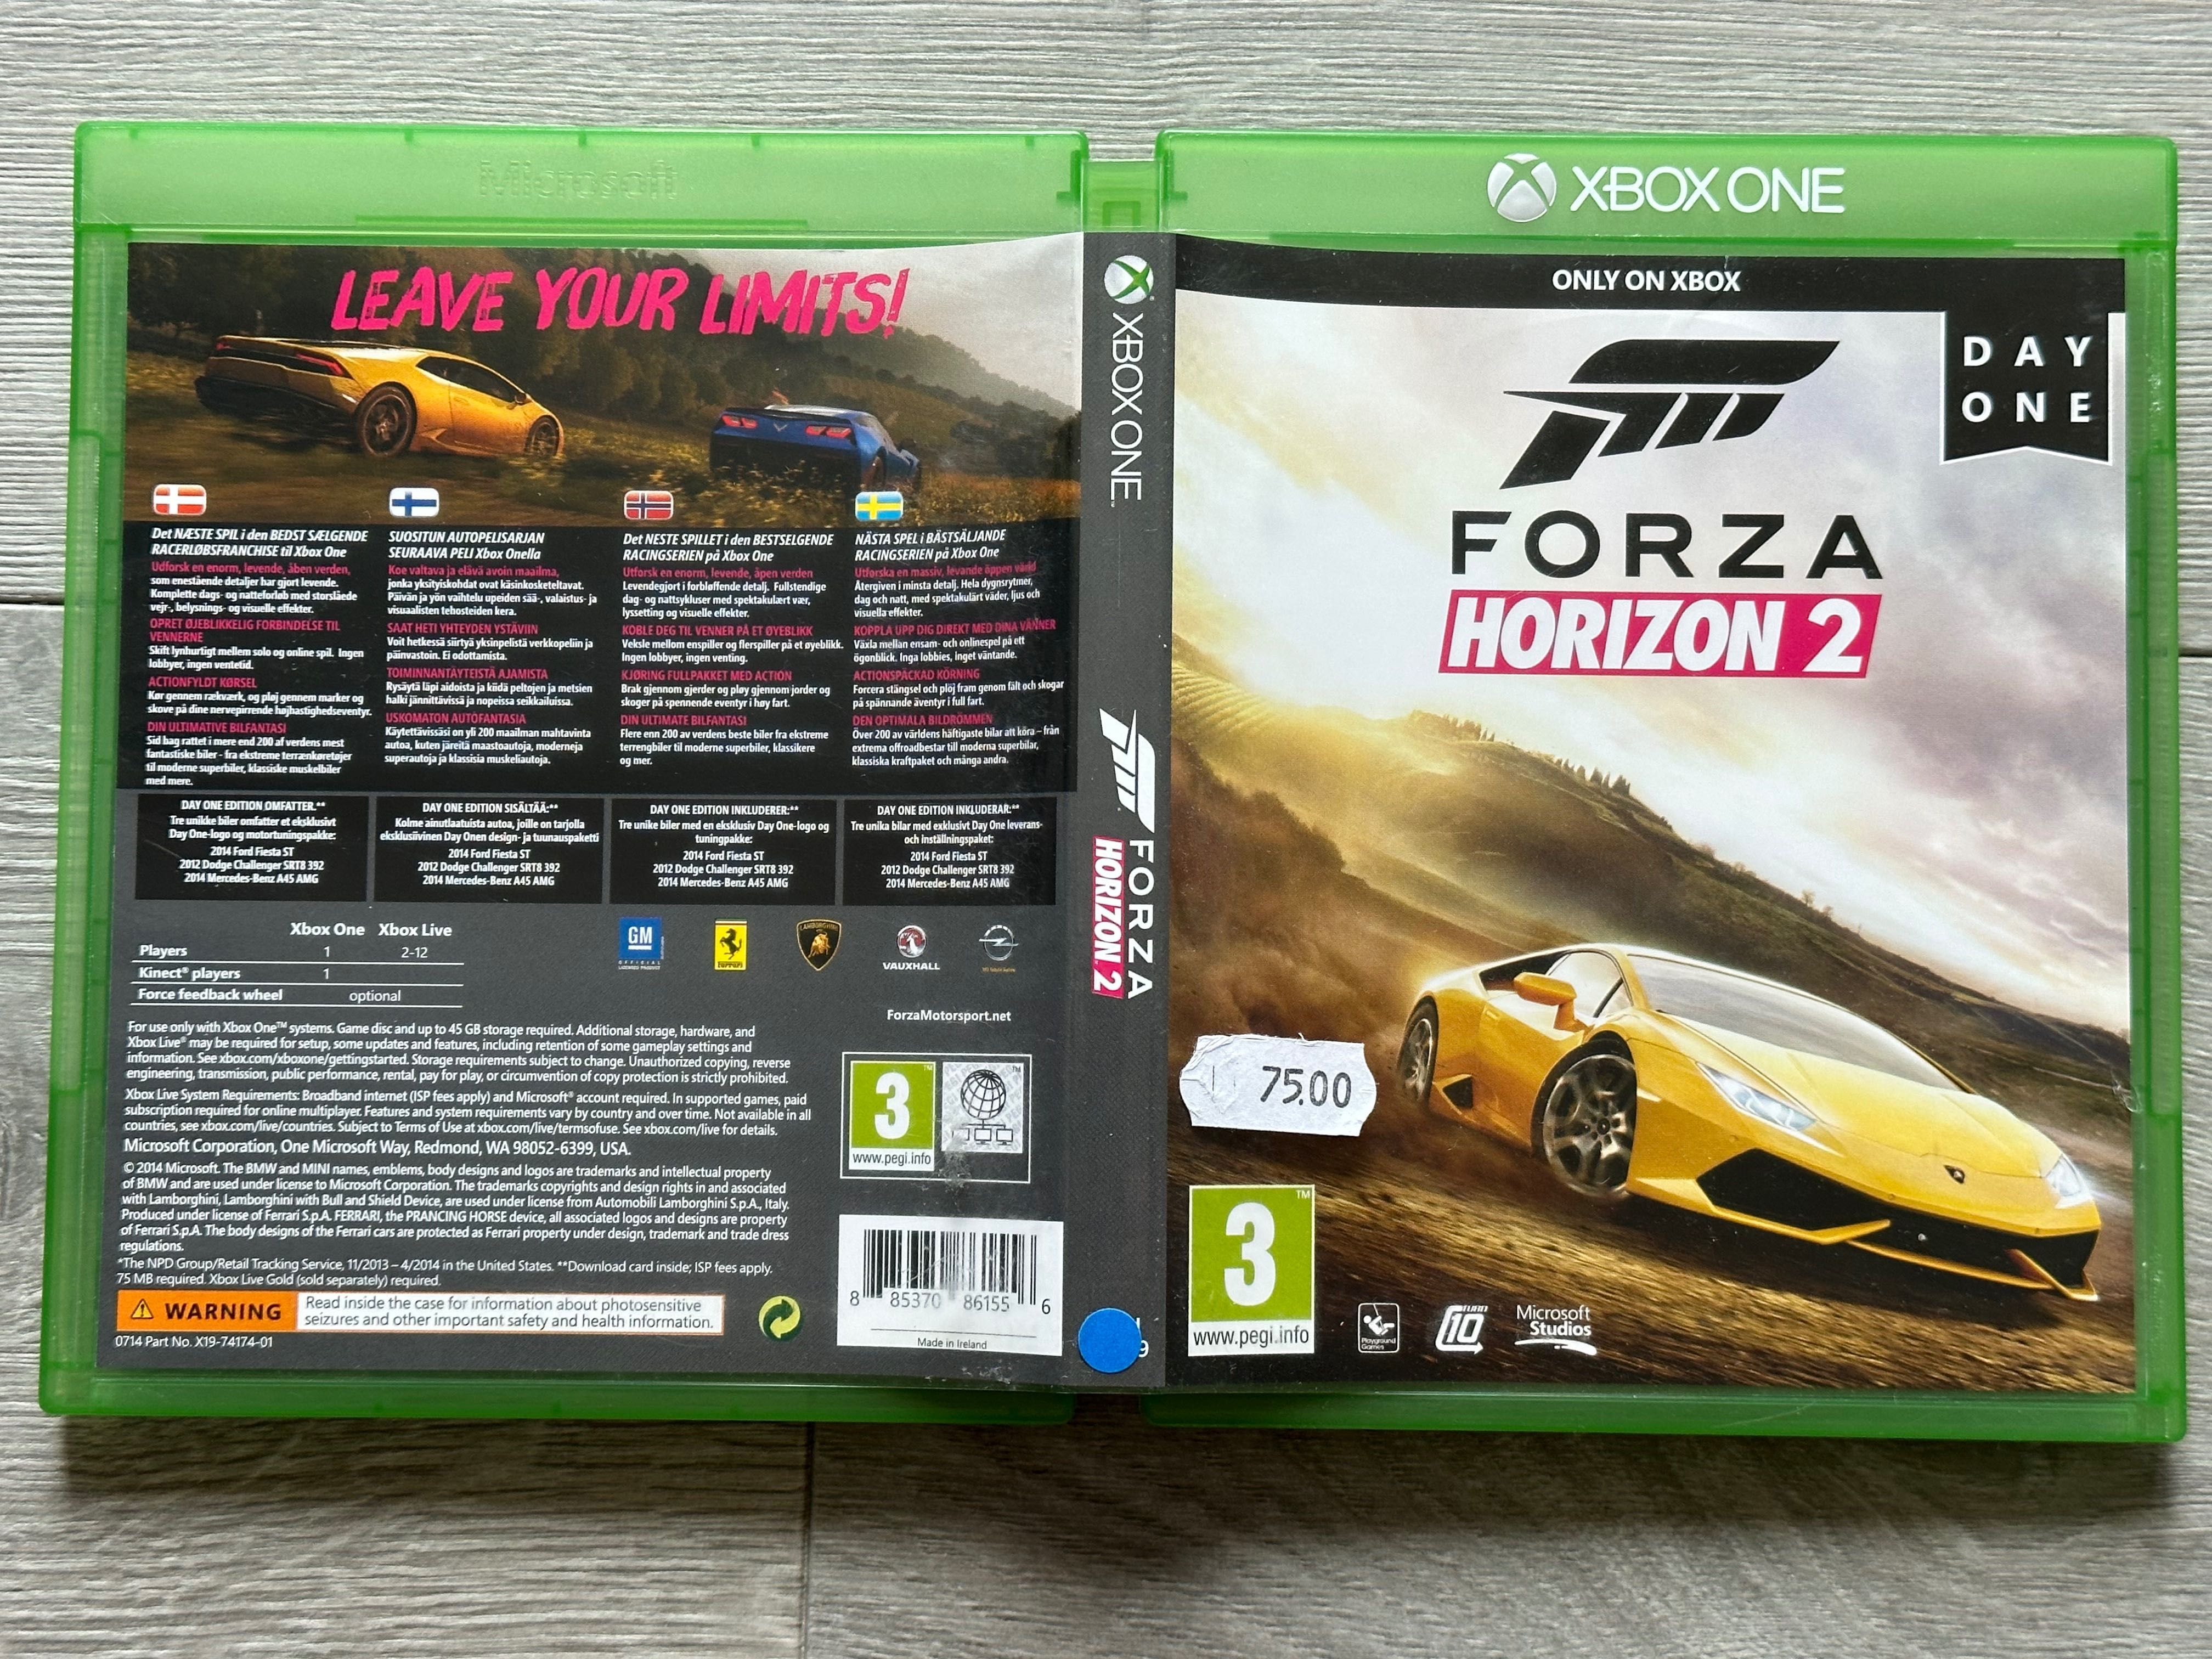 Forza Horizon 2 (Day One Edition) / Xbox One